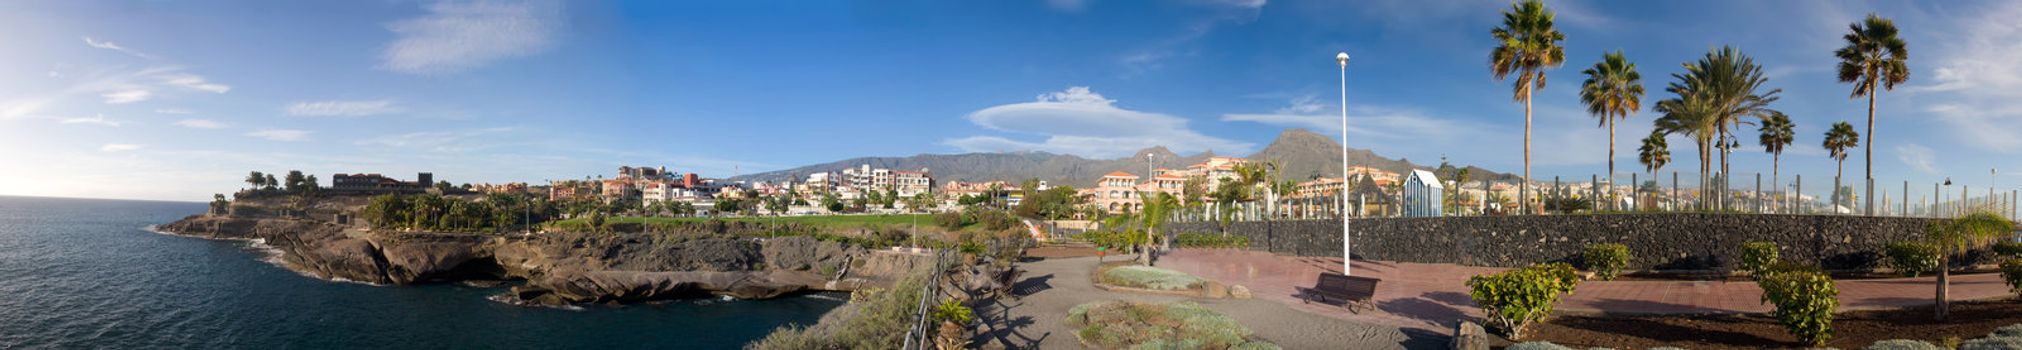 Tenerife Panorama landscape